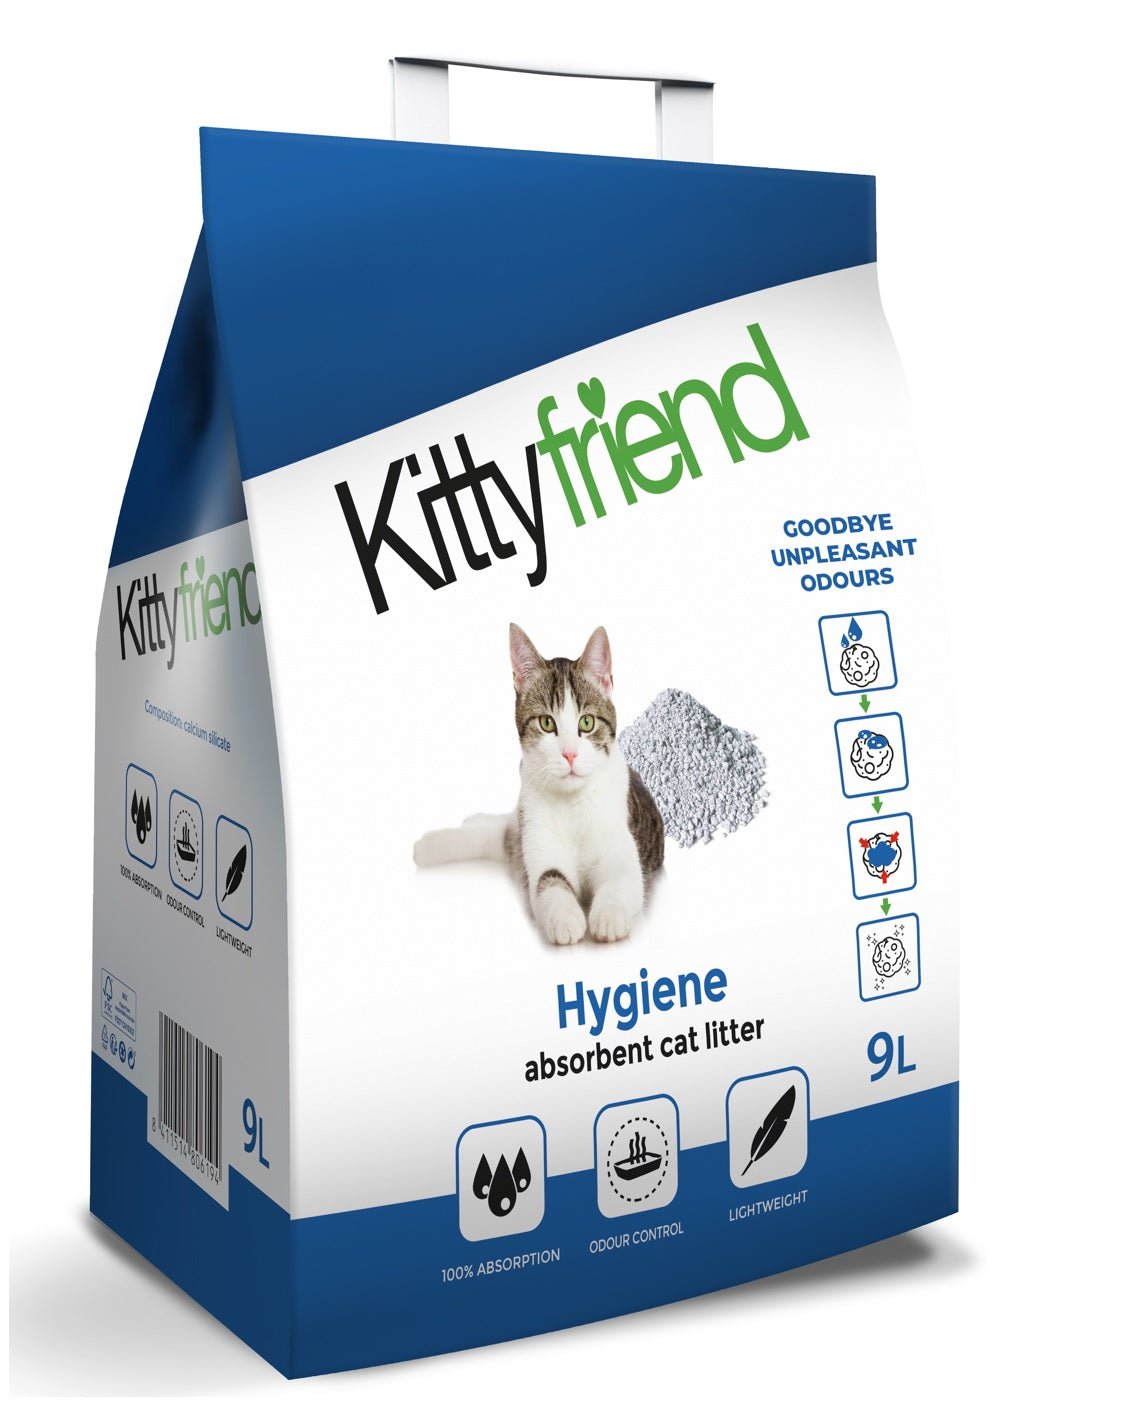 Kitty Friend Hygiene + Cat Litter 9 L, Kitty Friend,